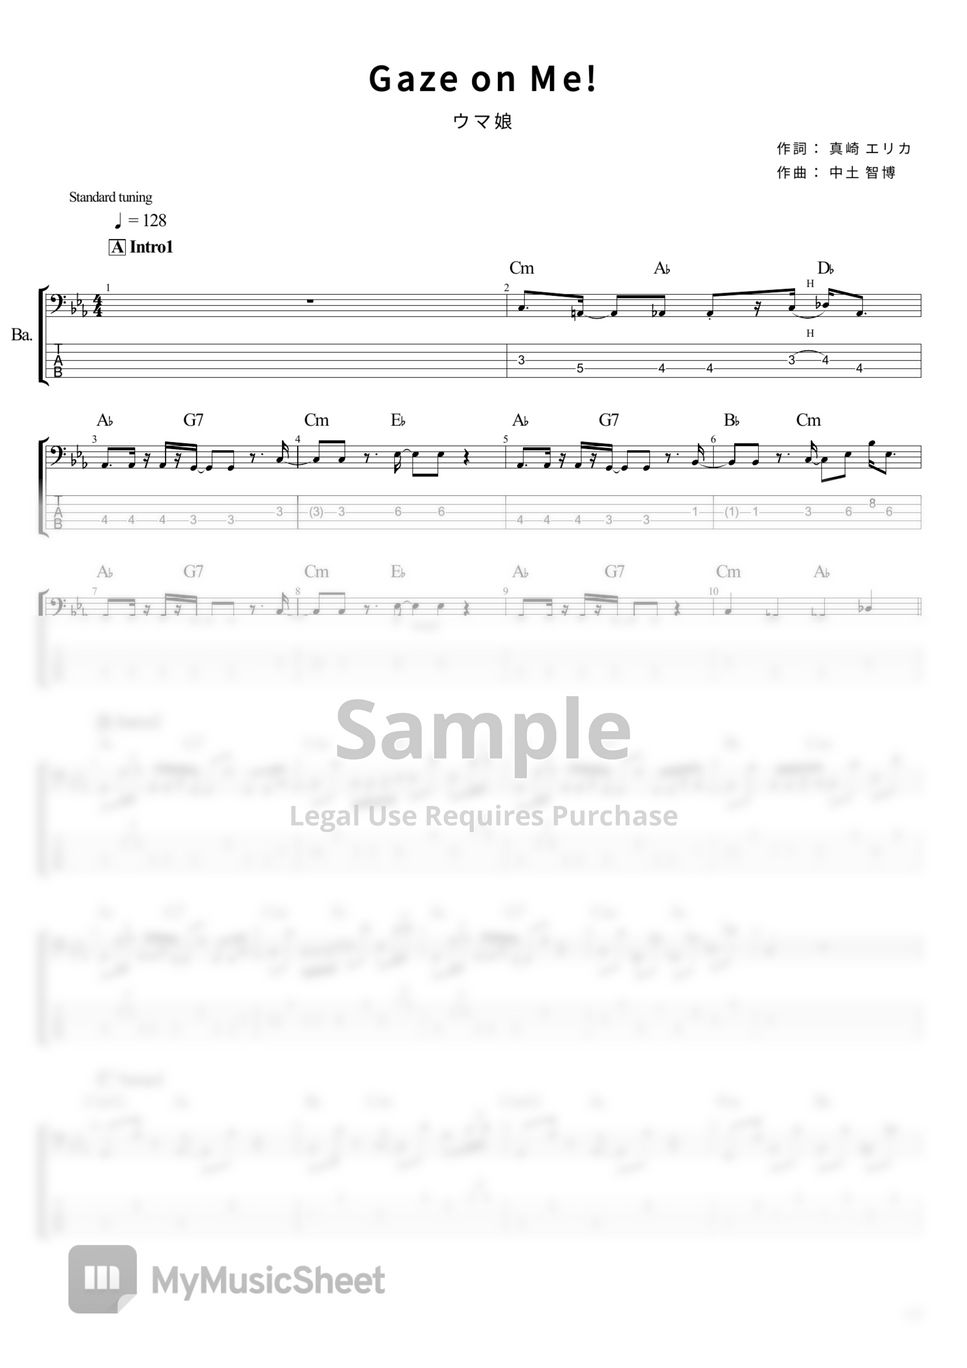 uma musume - Gaze on Me! (Full size) (ベース Tab 5-string弦) by T's bass score